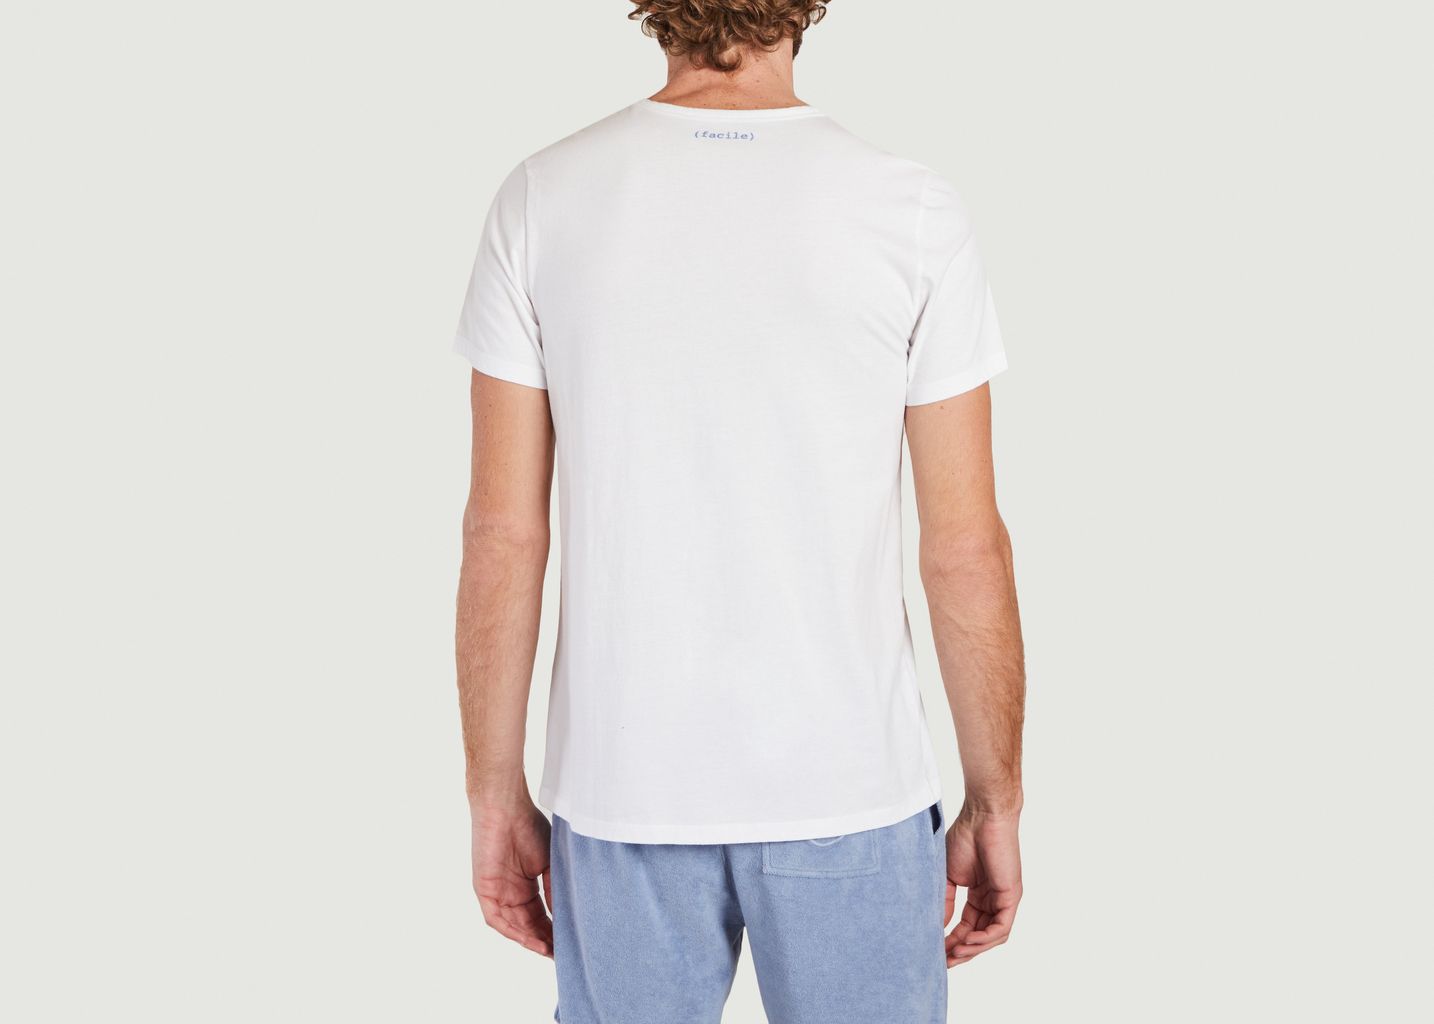 Yann Riva printed T-shirt - Les Garçons Faciles